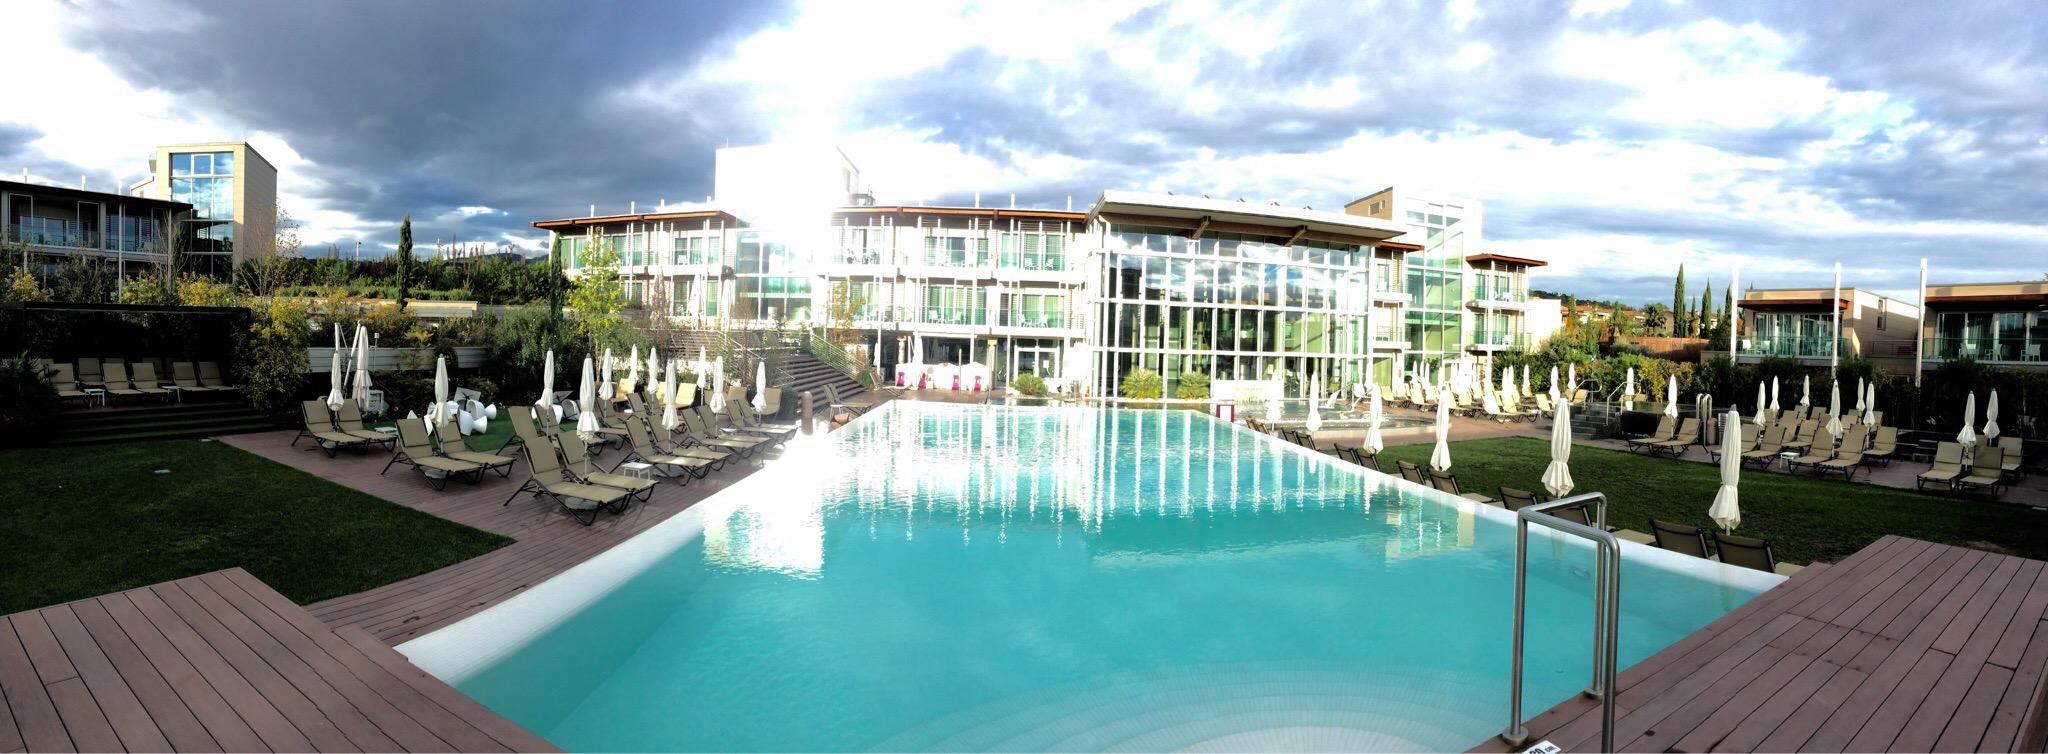 Aqualux Hotel Spa